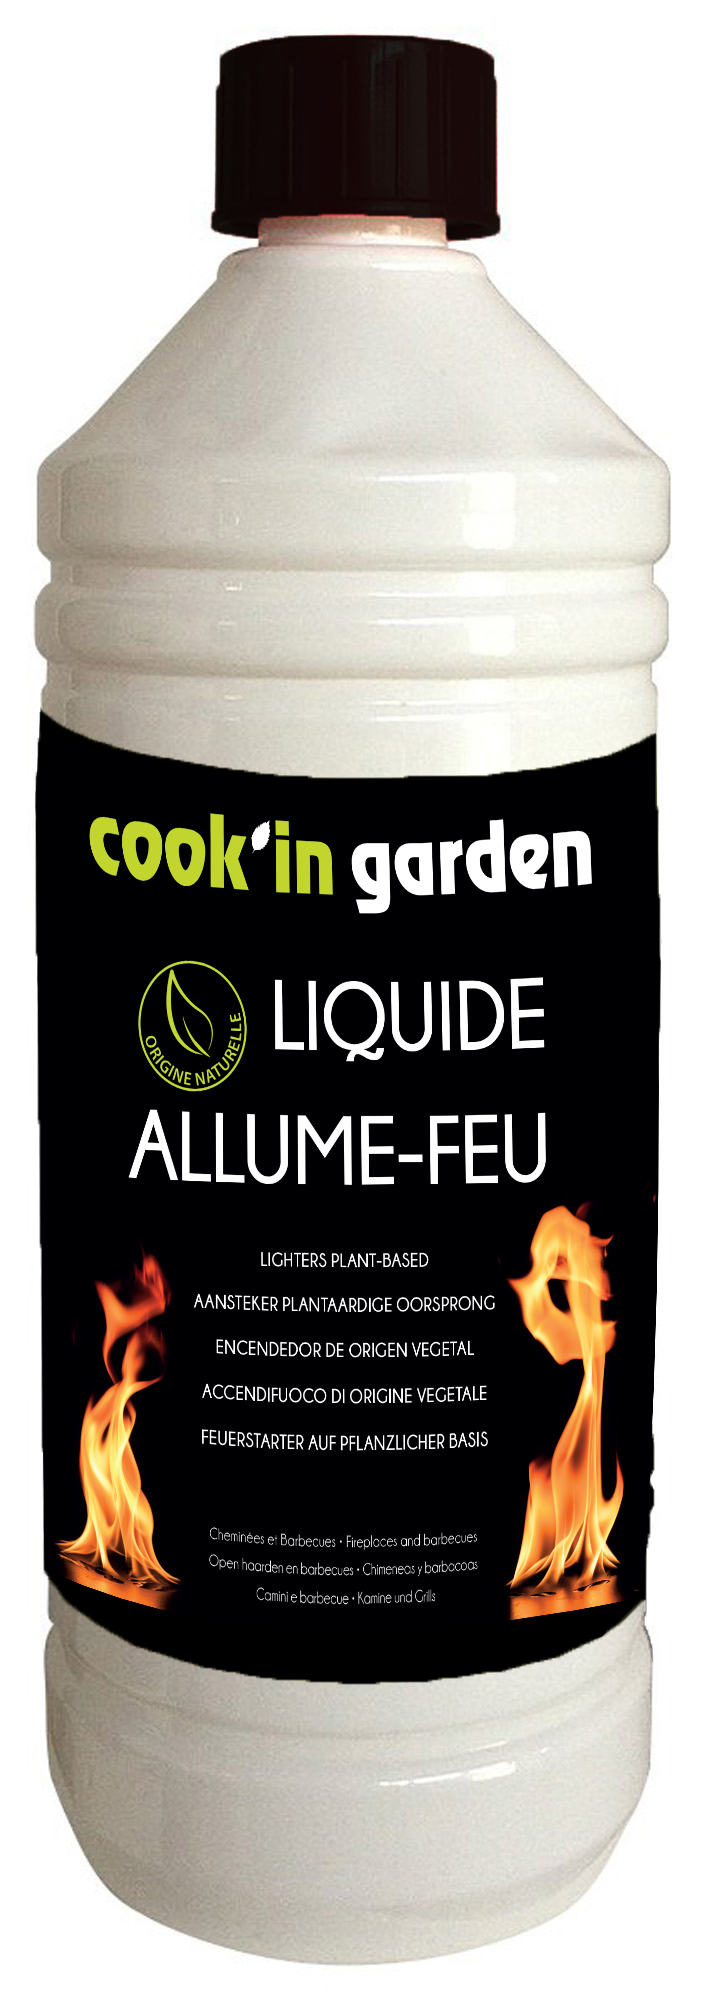 Allume-feu liquide - COOK'IN GARDEN